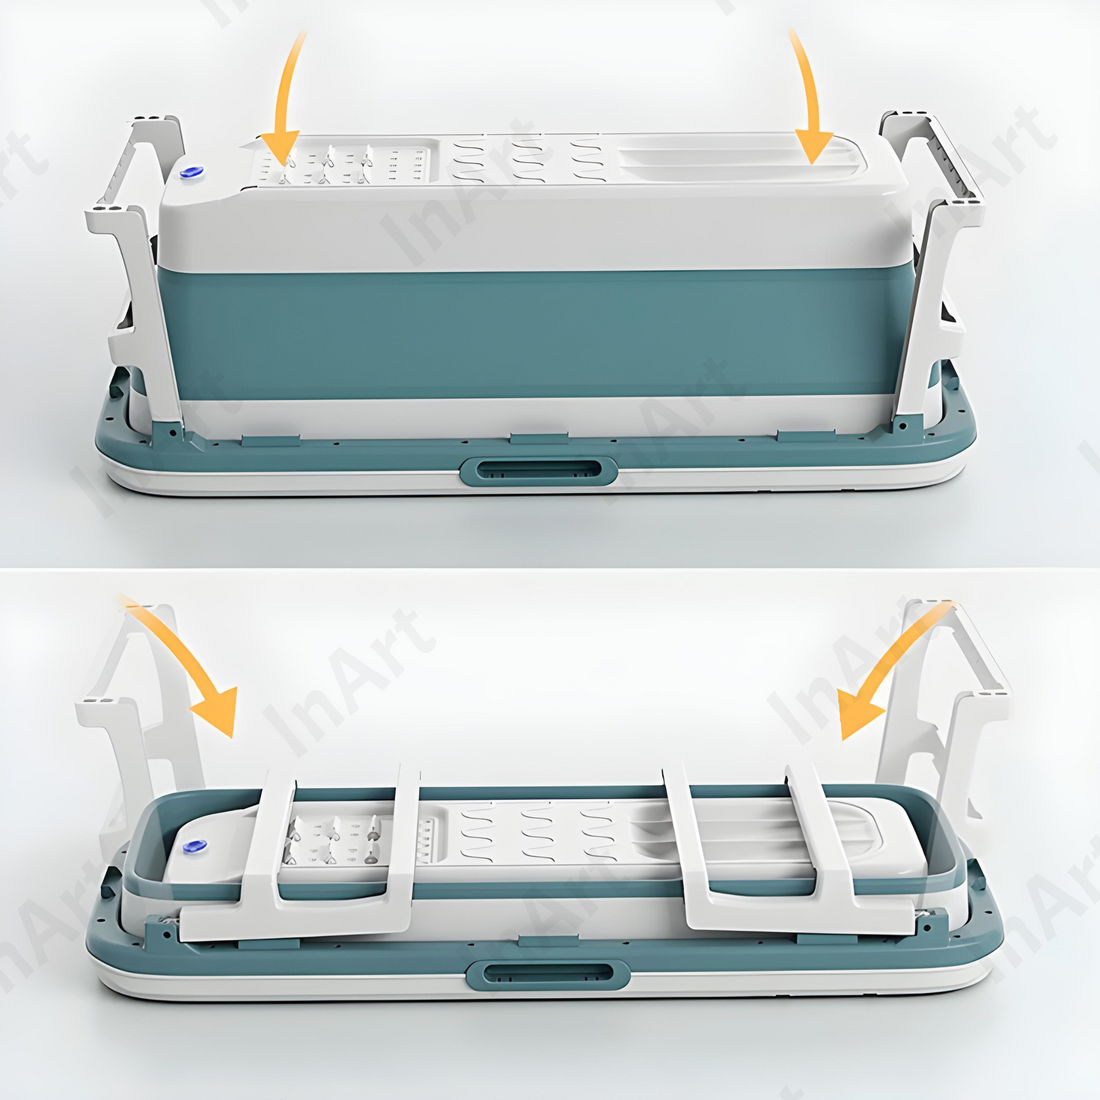 InArt Modern Freestanding Foldable Bathtub with Drain Hose and Cover, Multi-Color, 140cm x 60cm x 57.5cm - InArt-Studio